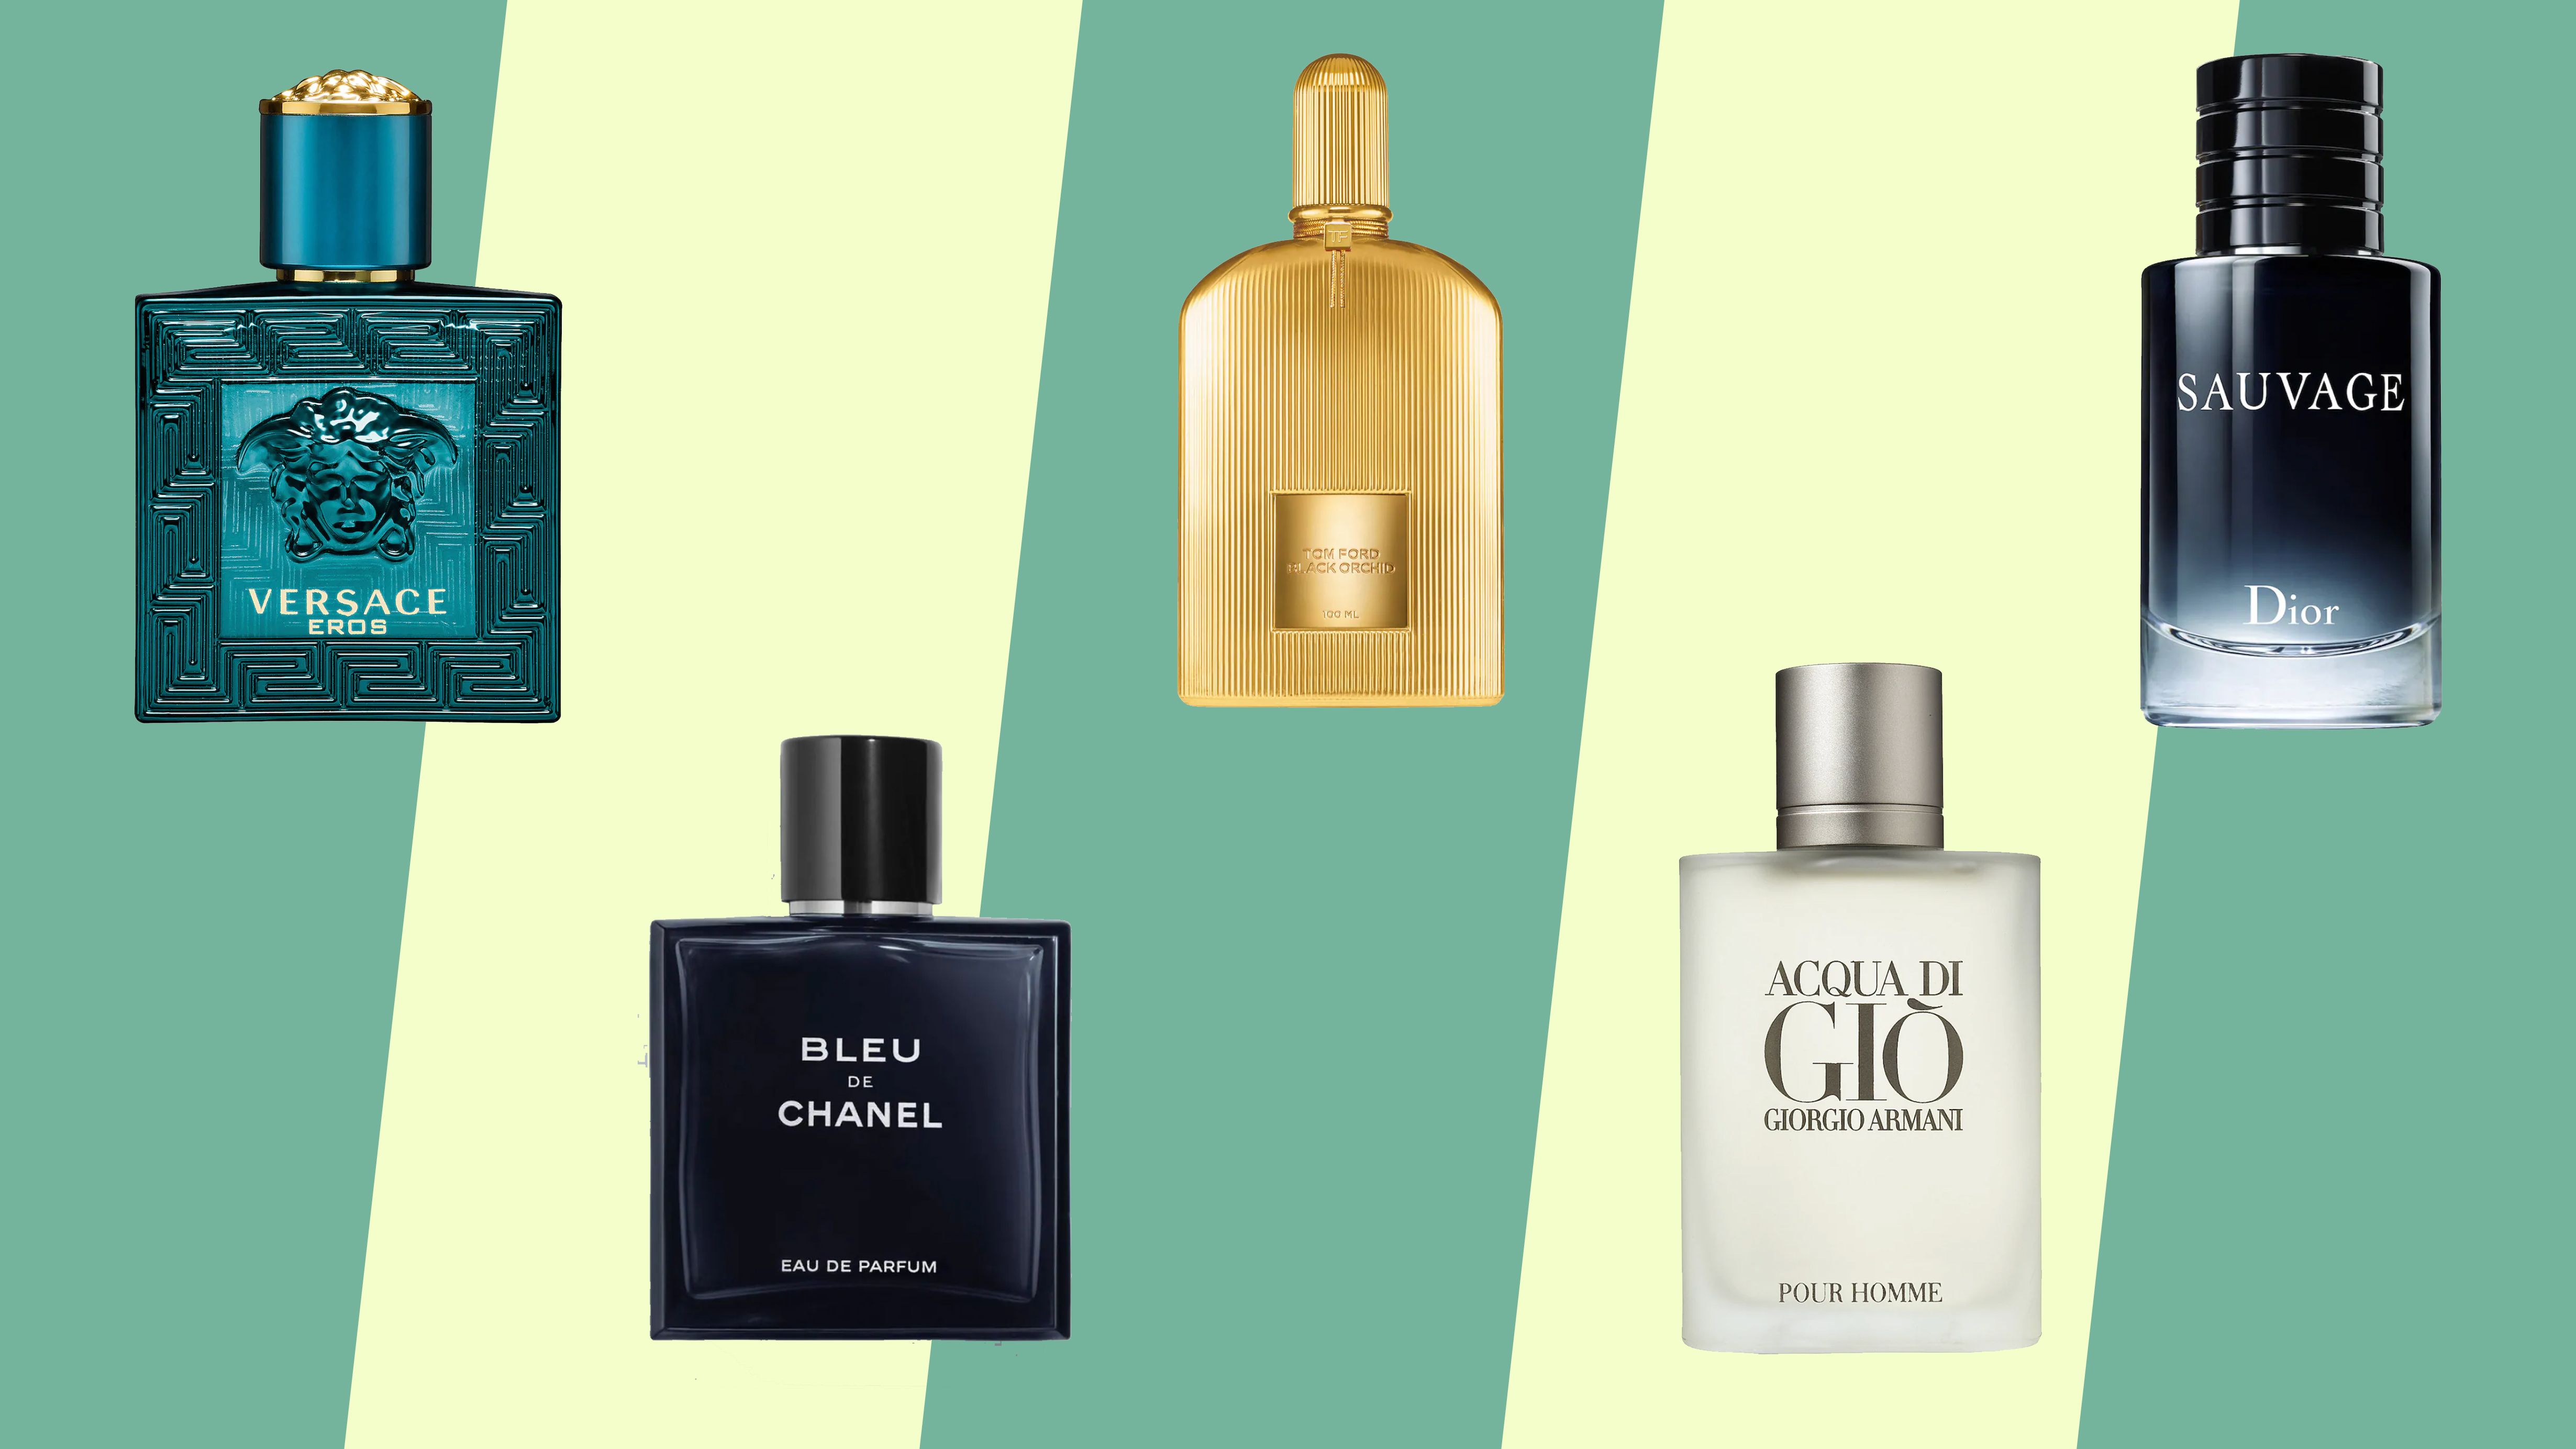 Chanel Blue De Chanel Cologne! The Best Fragrance For Men